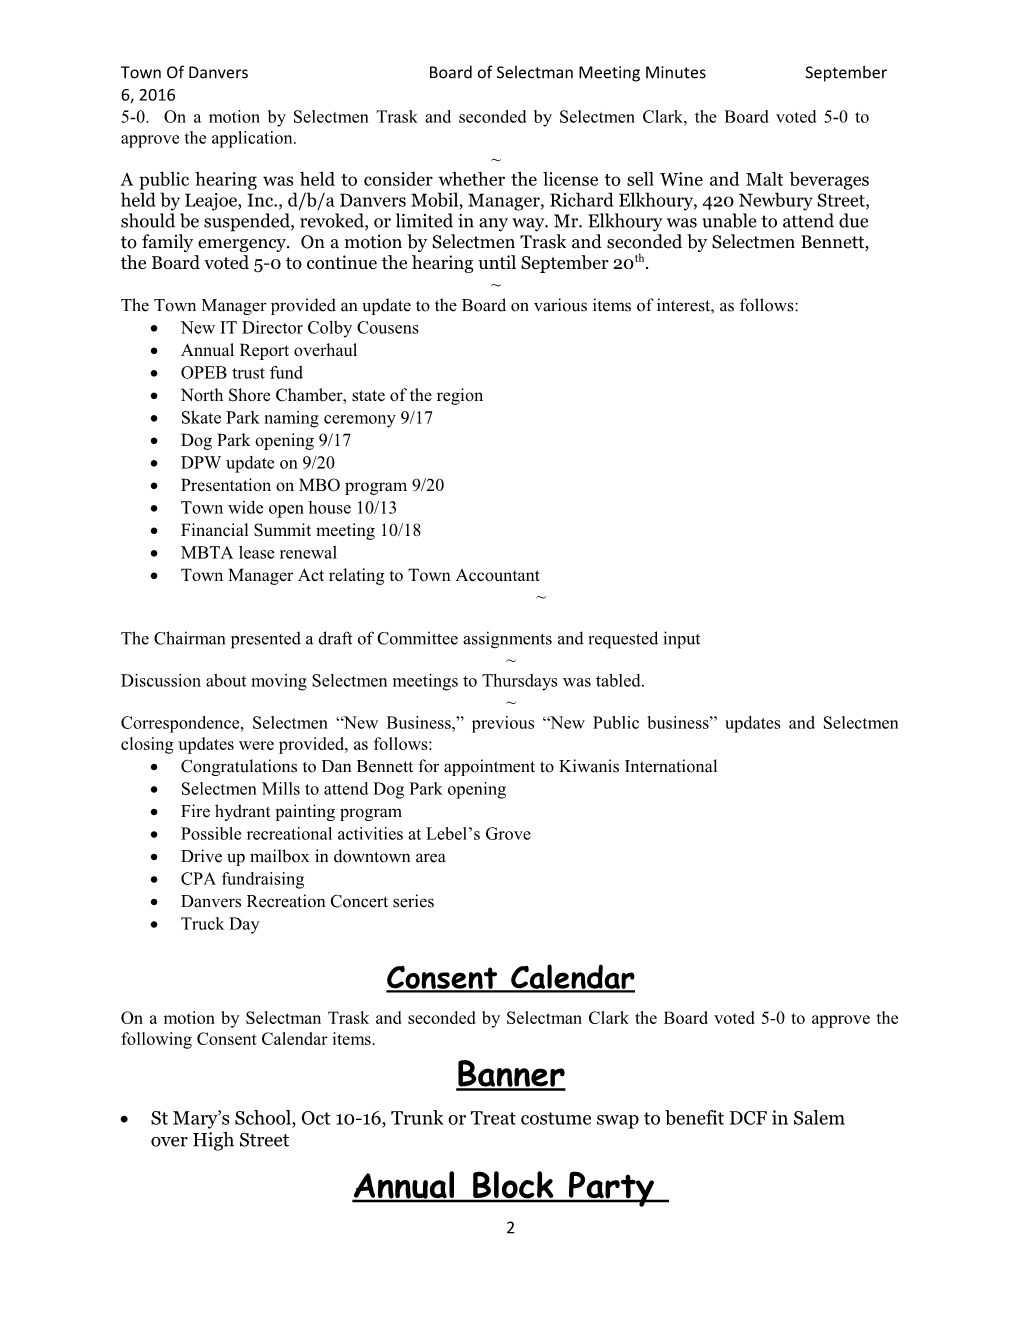 Town of Danvers Board of Selectman Meeting Minutes February 2, 2016